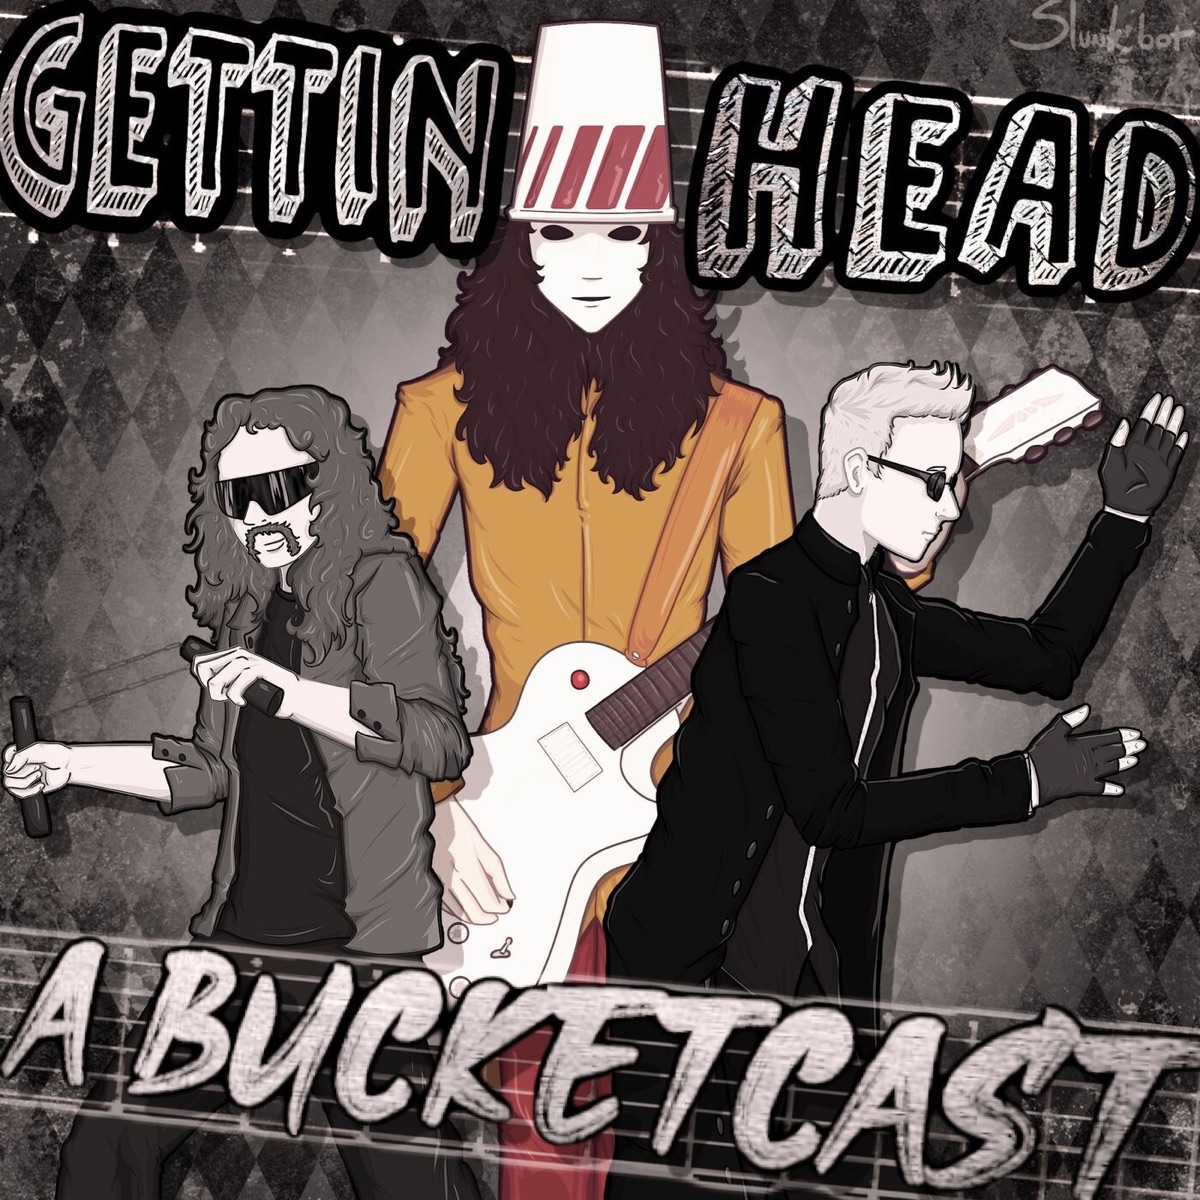 BONUS Gettin Conspiracy A Primuscast – Gettin Head A Bucketcast – Podcast pic